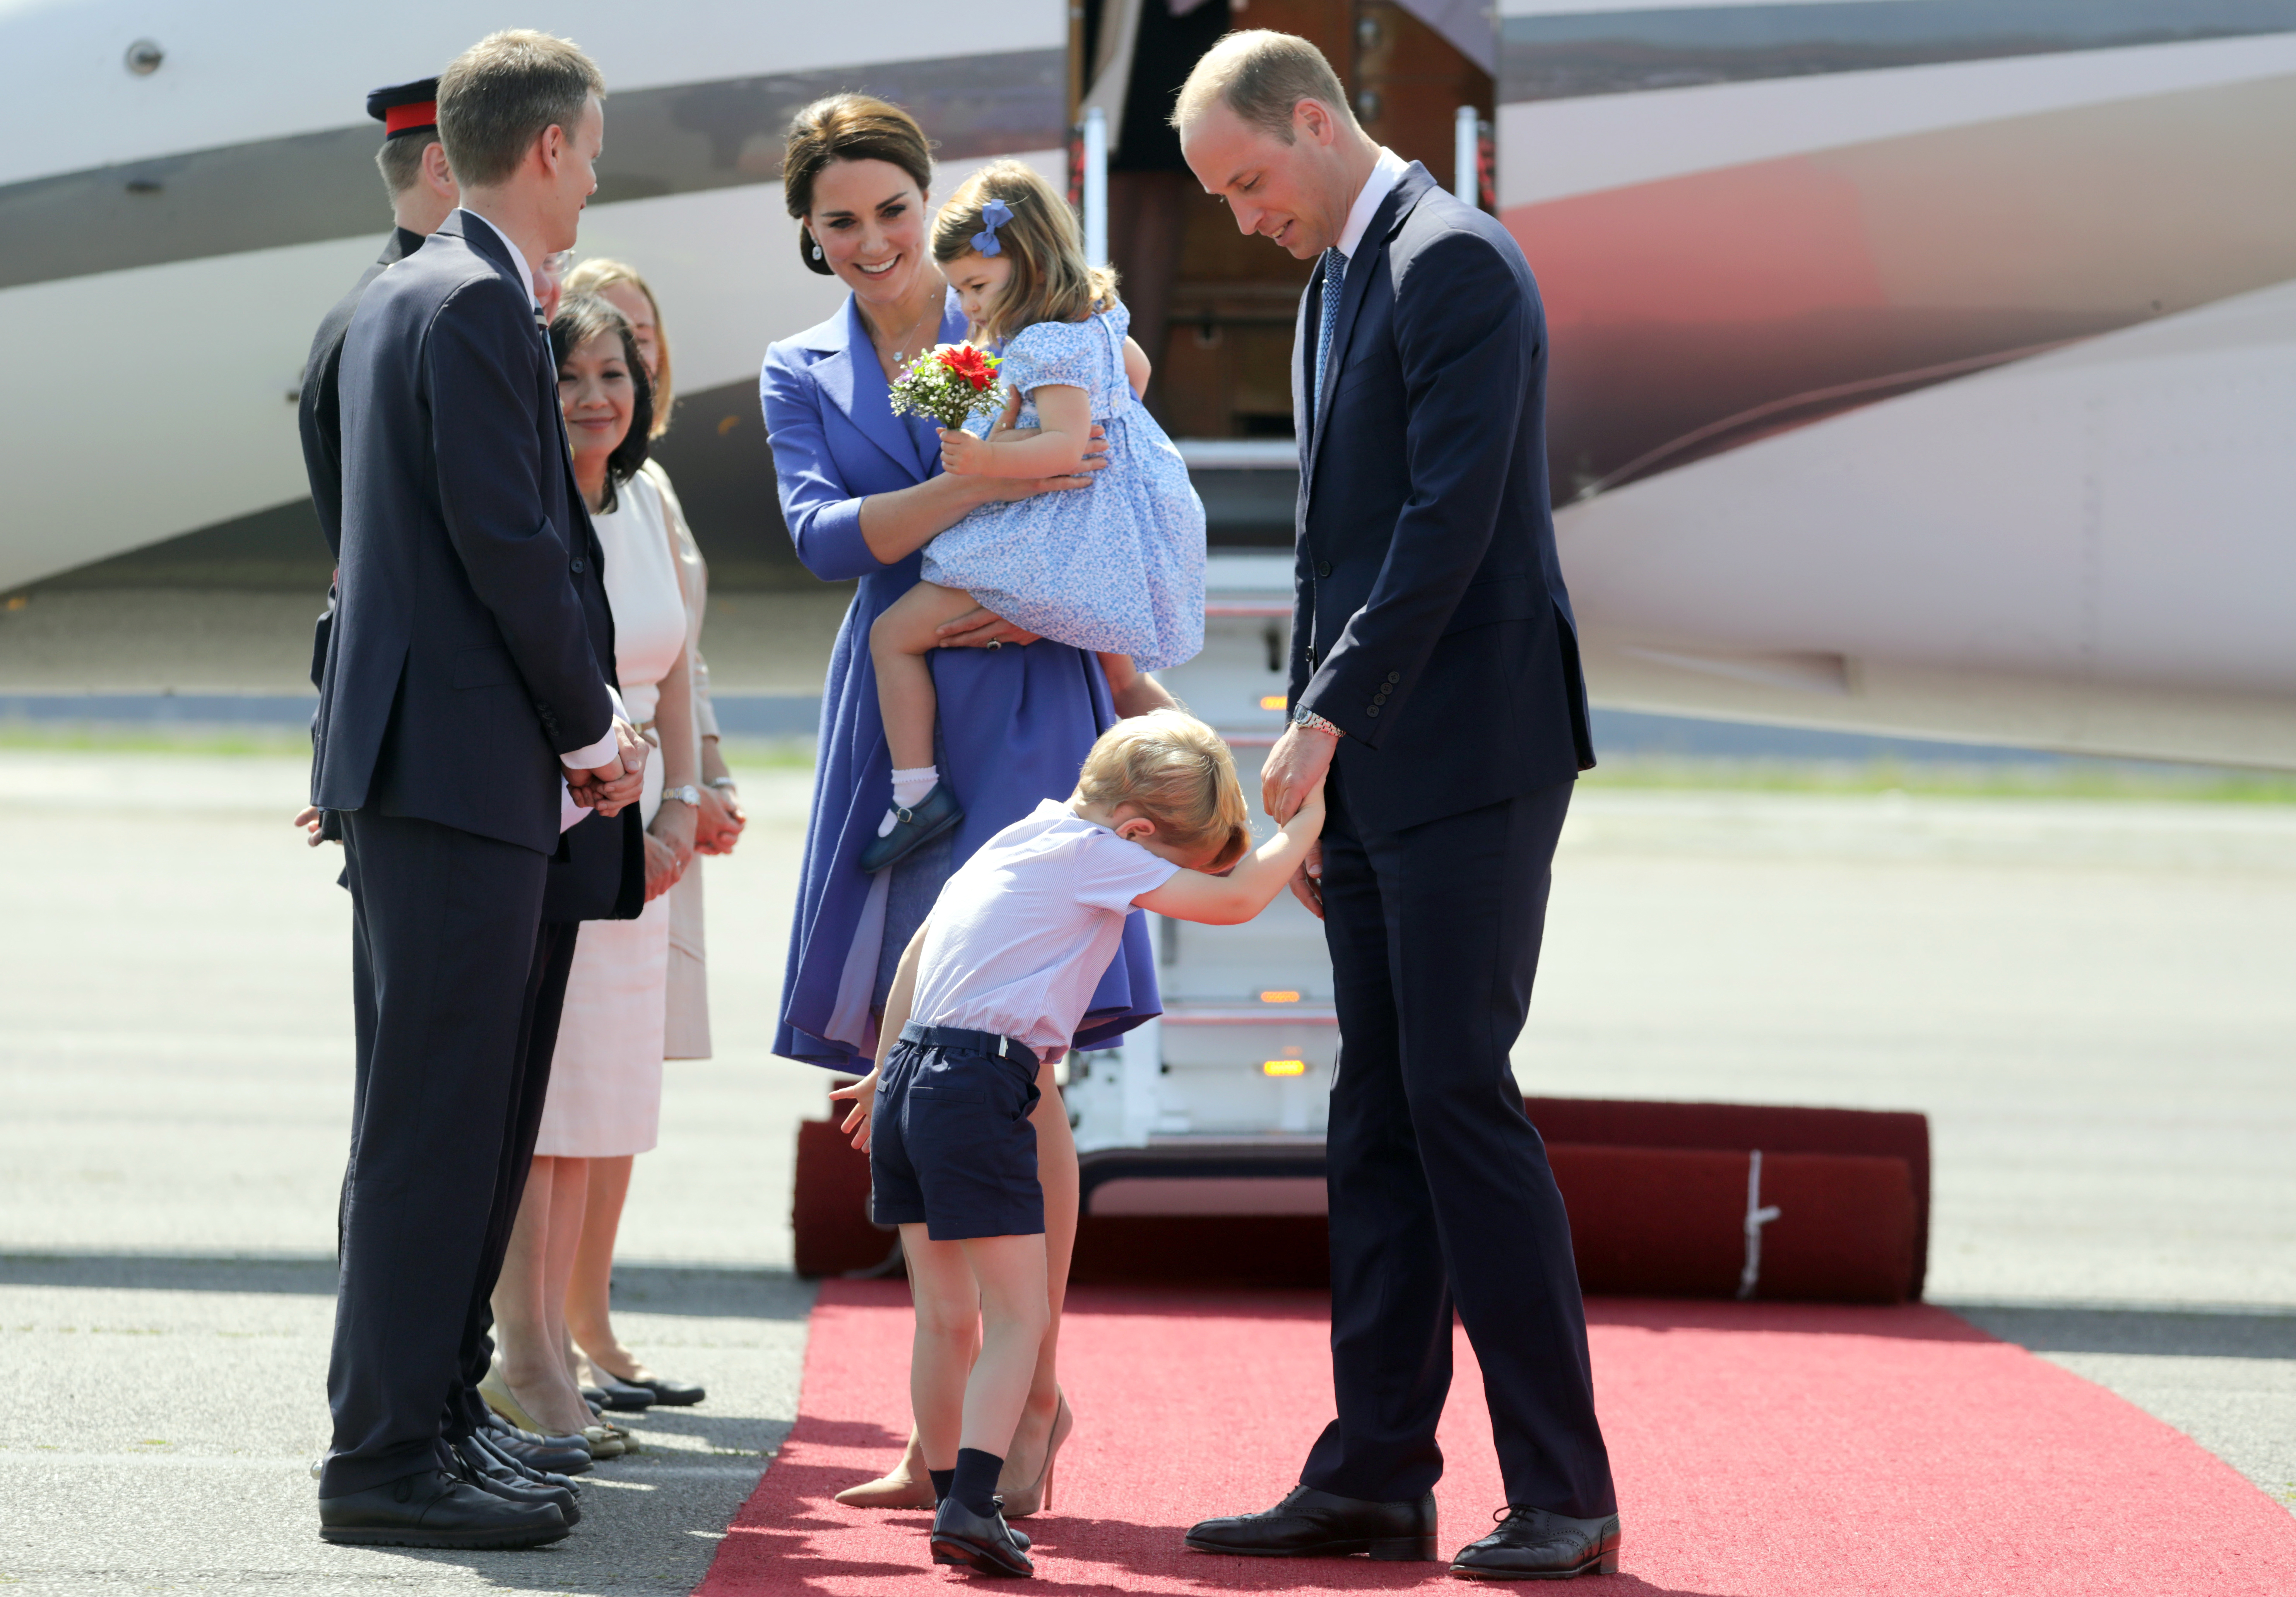 Принц Уилям, Катрин и децата им - принц Джордж и пренцеса Шарлот пристигат в Германия